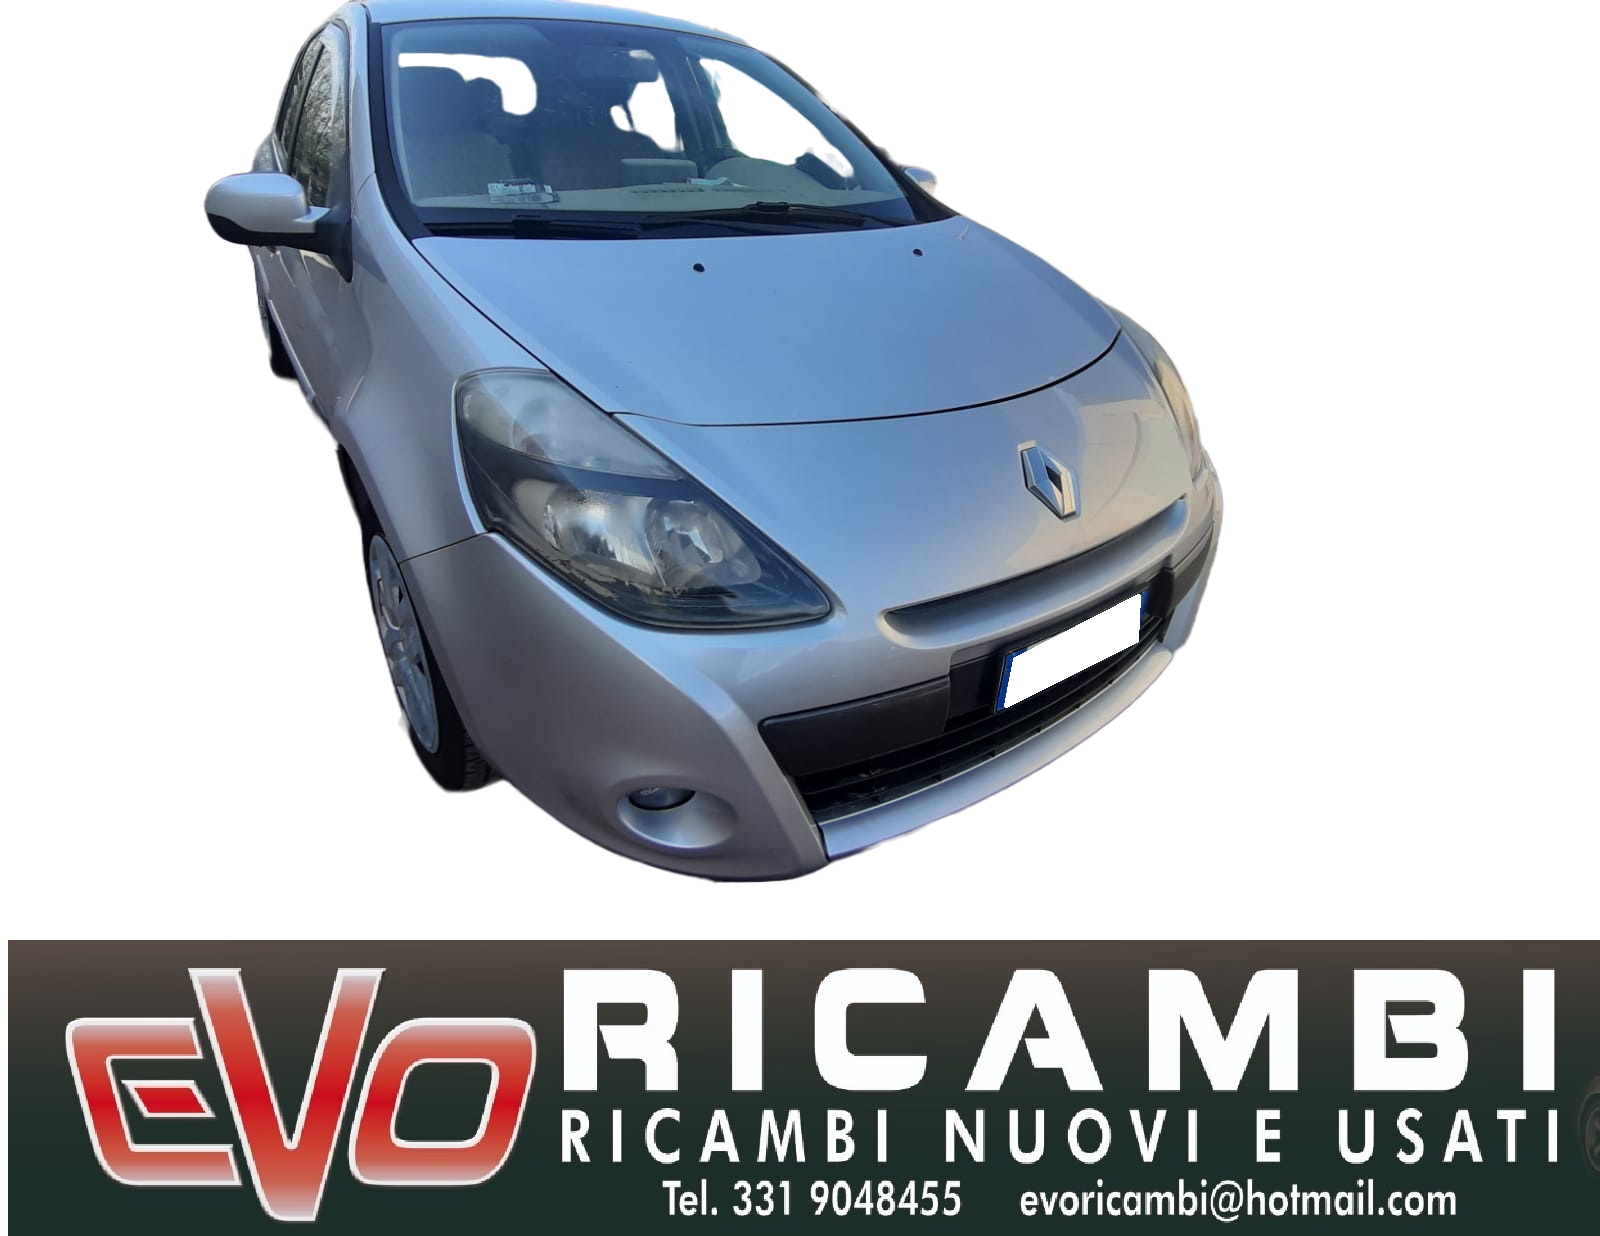 Ricambi per Renault Clio III serie Restyling 1.2 benzina 75cv